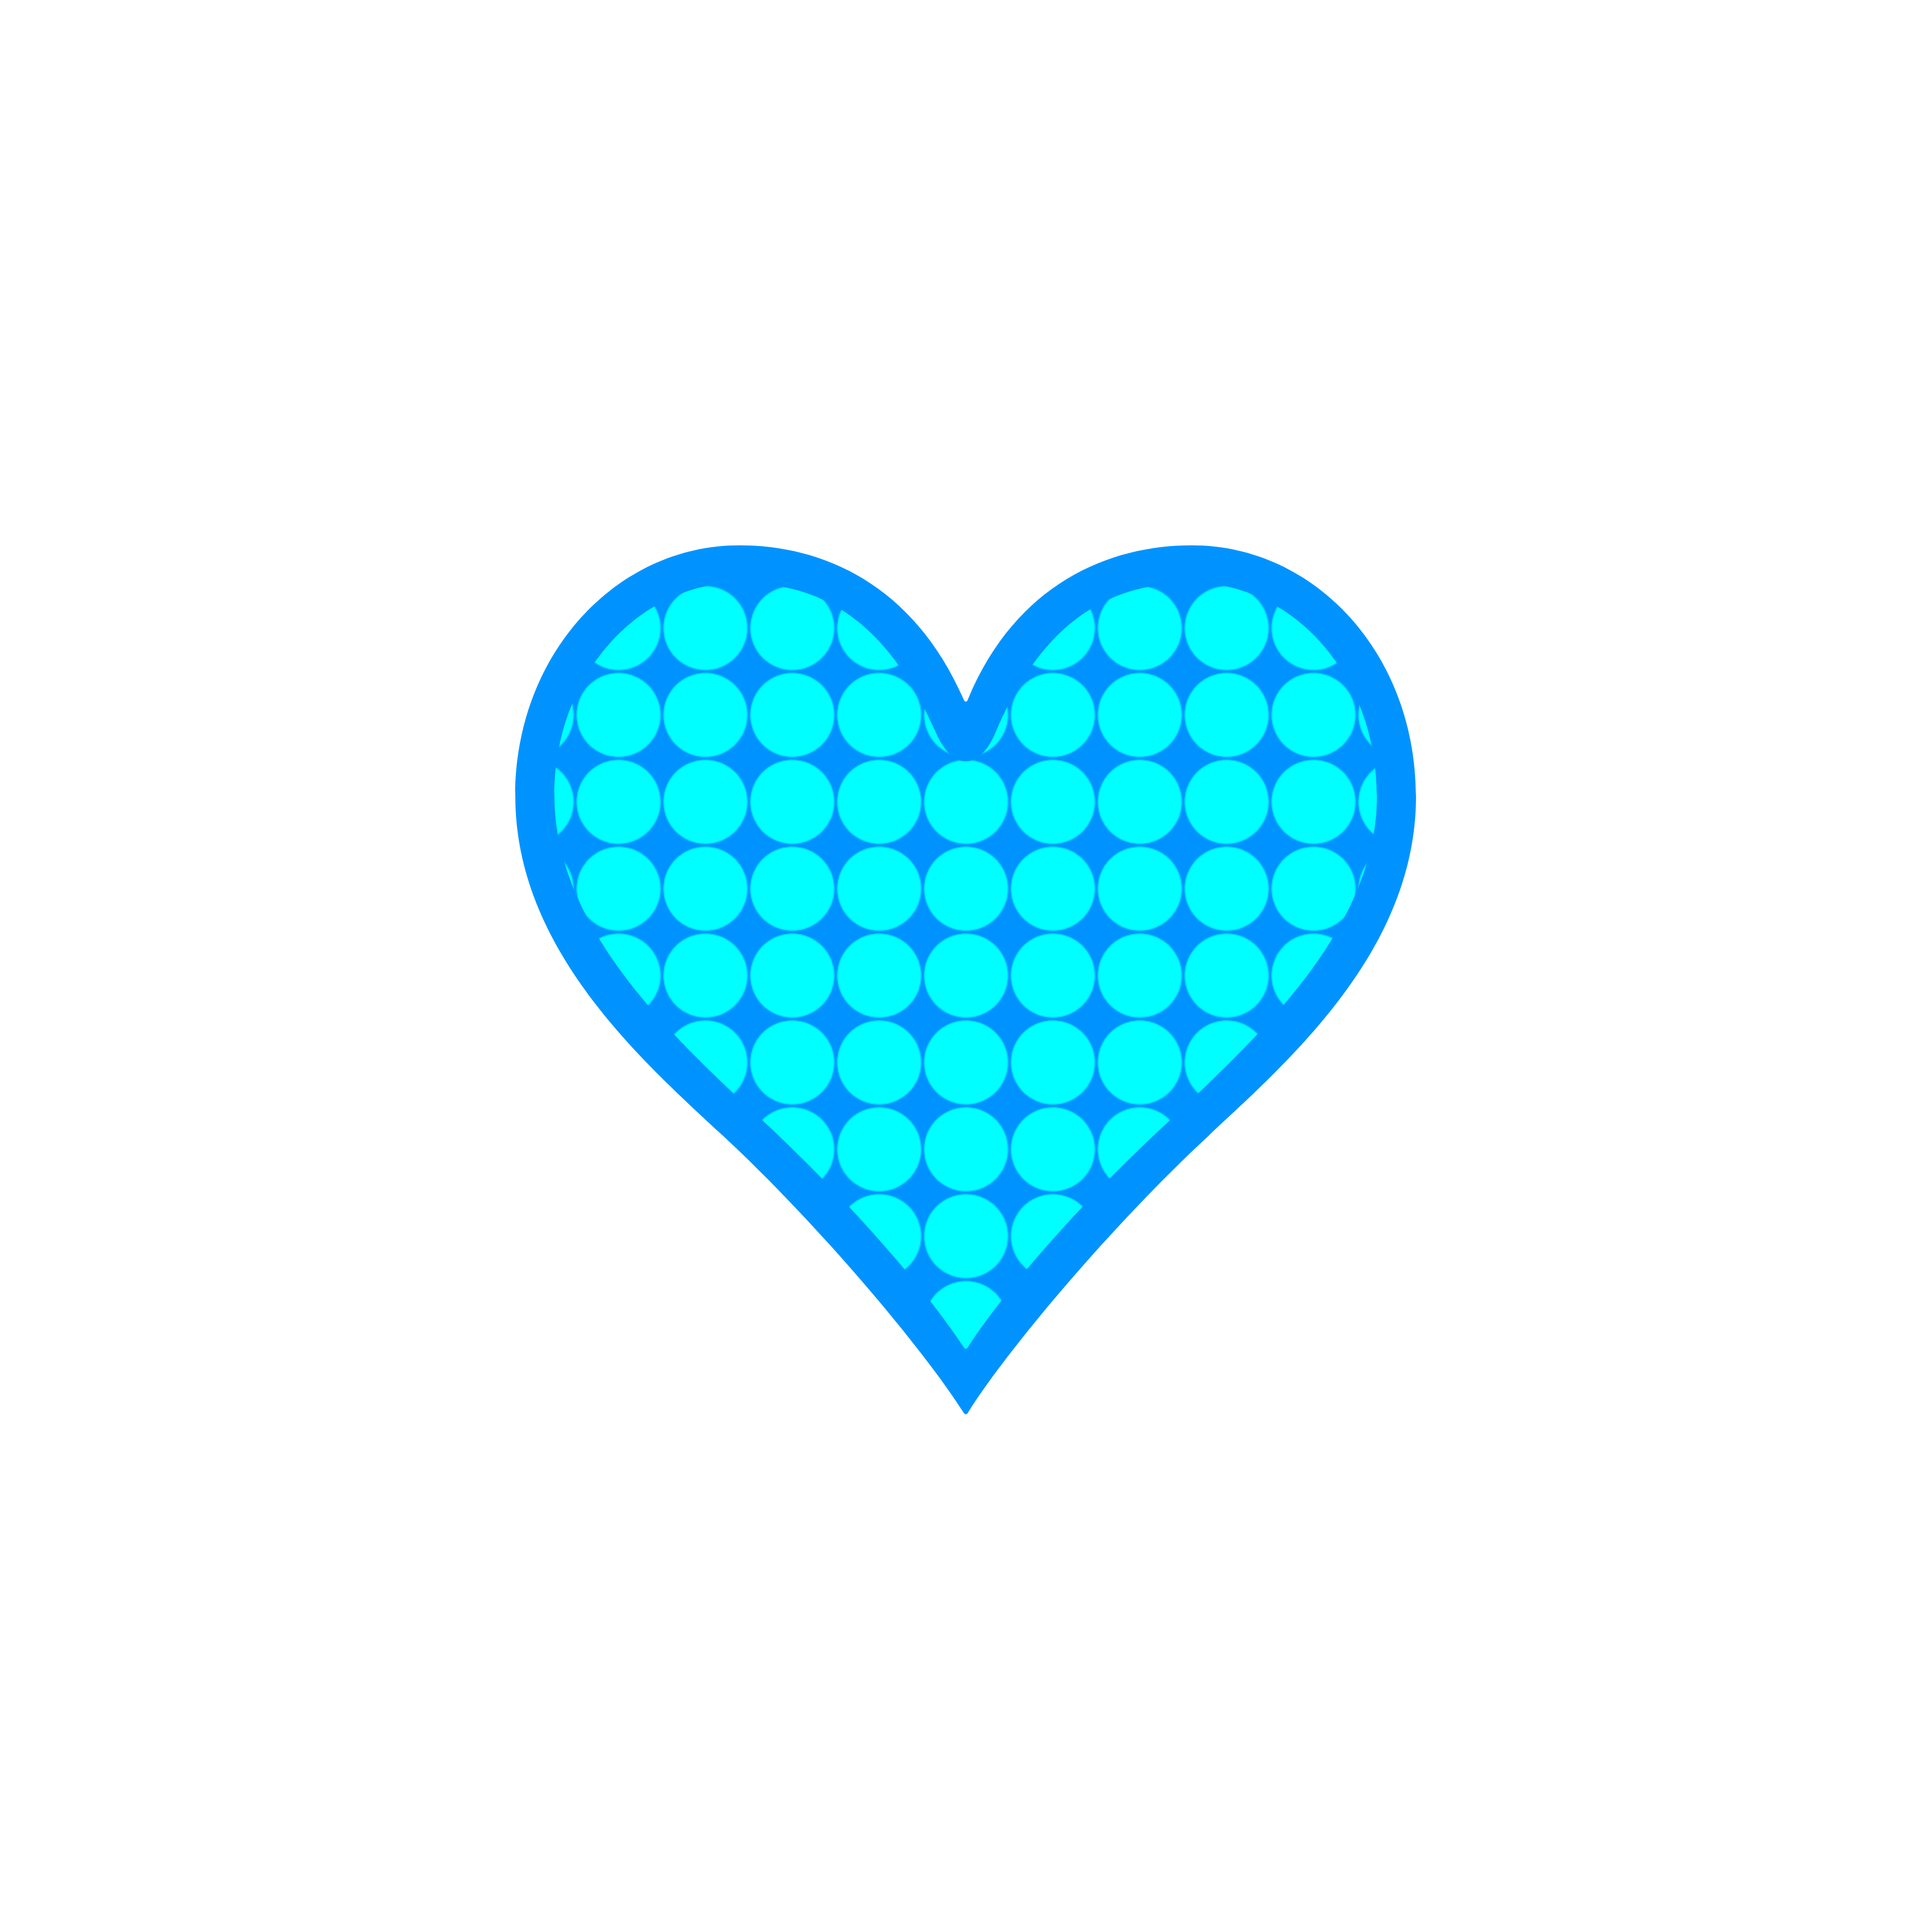 heart heartshape heartsymbol heartdesign sticker by @ewsiee